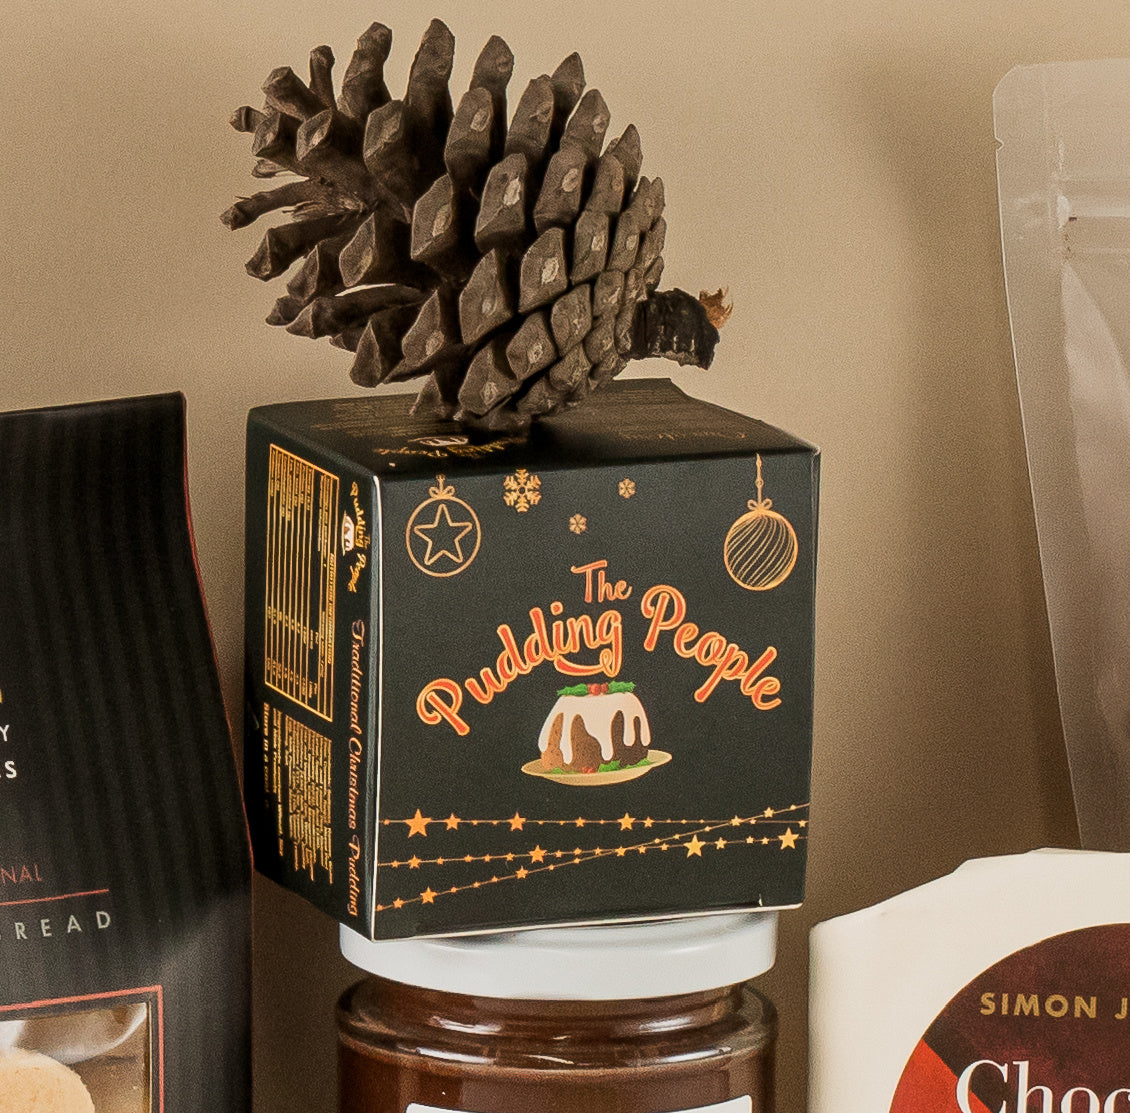 The Pudding People Christmas Pudding | Christmas Hampers Australia | Best Christmas Gourmet Food Gift Baskets Australia